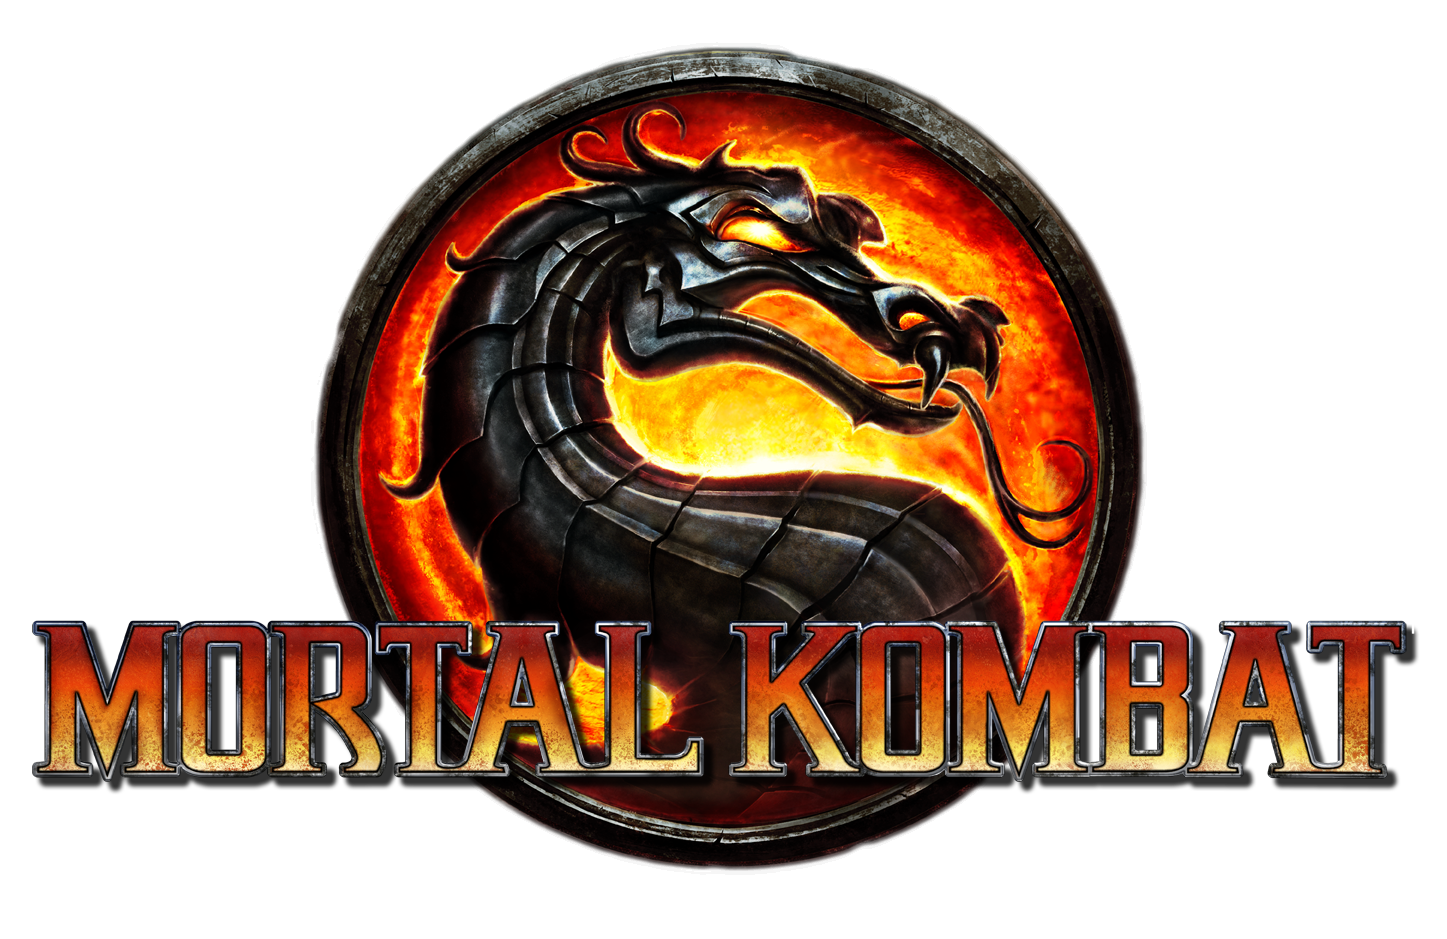 mortal kombat-best-selling fighting game